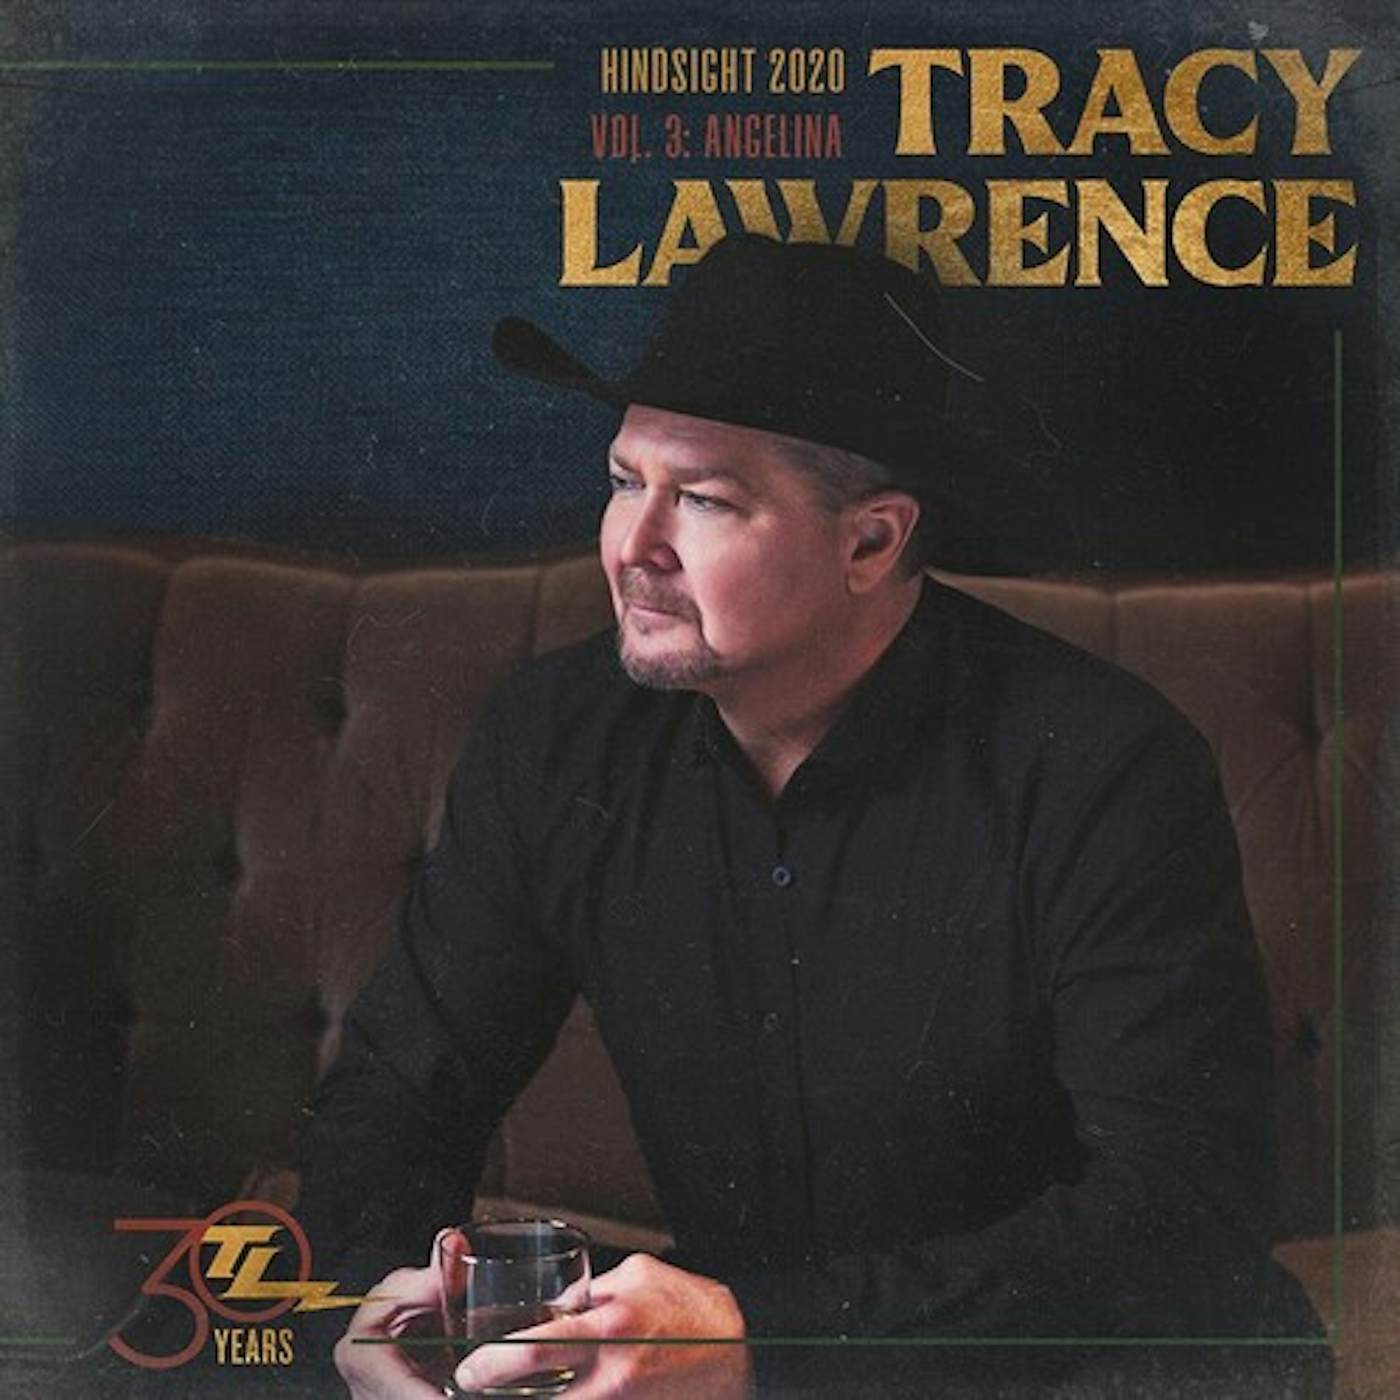 Tracy Lawrence HINDSIGHT 2020, VOL 3: ANGELINA CD